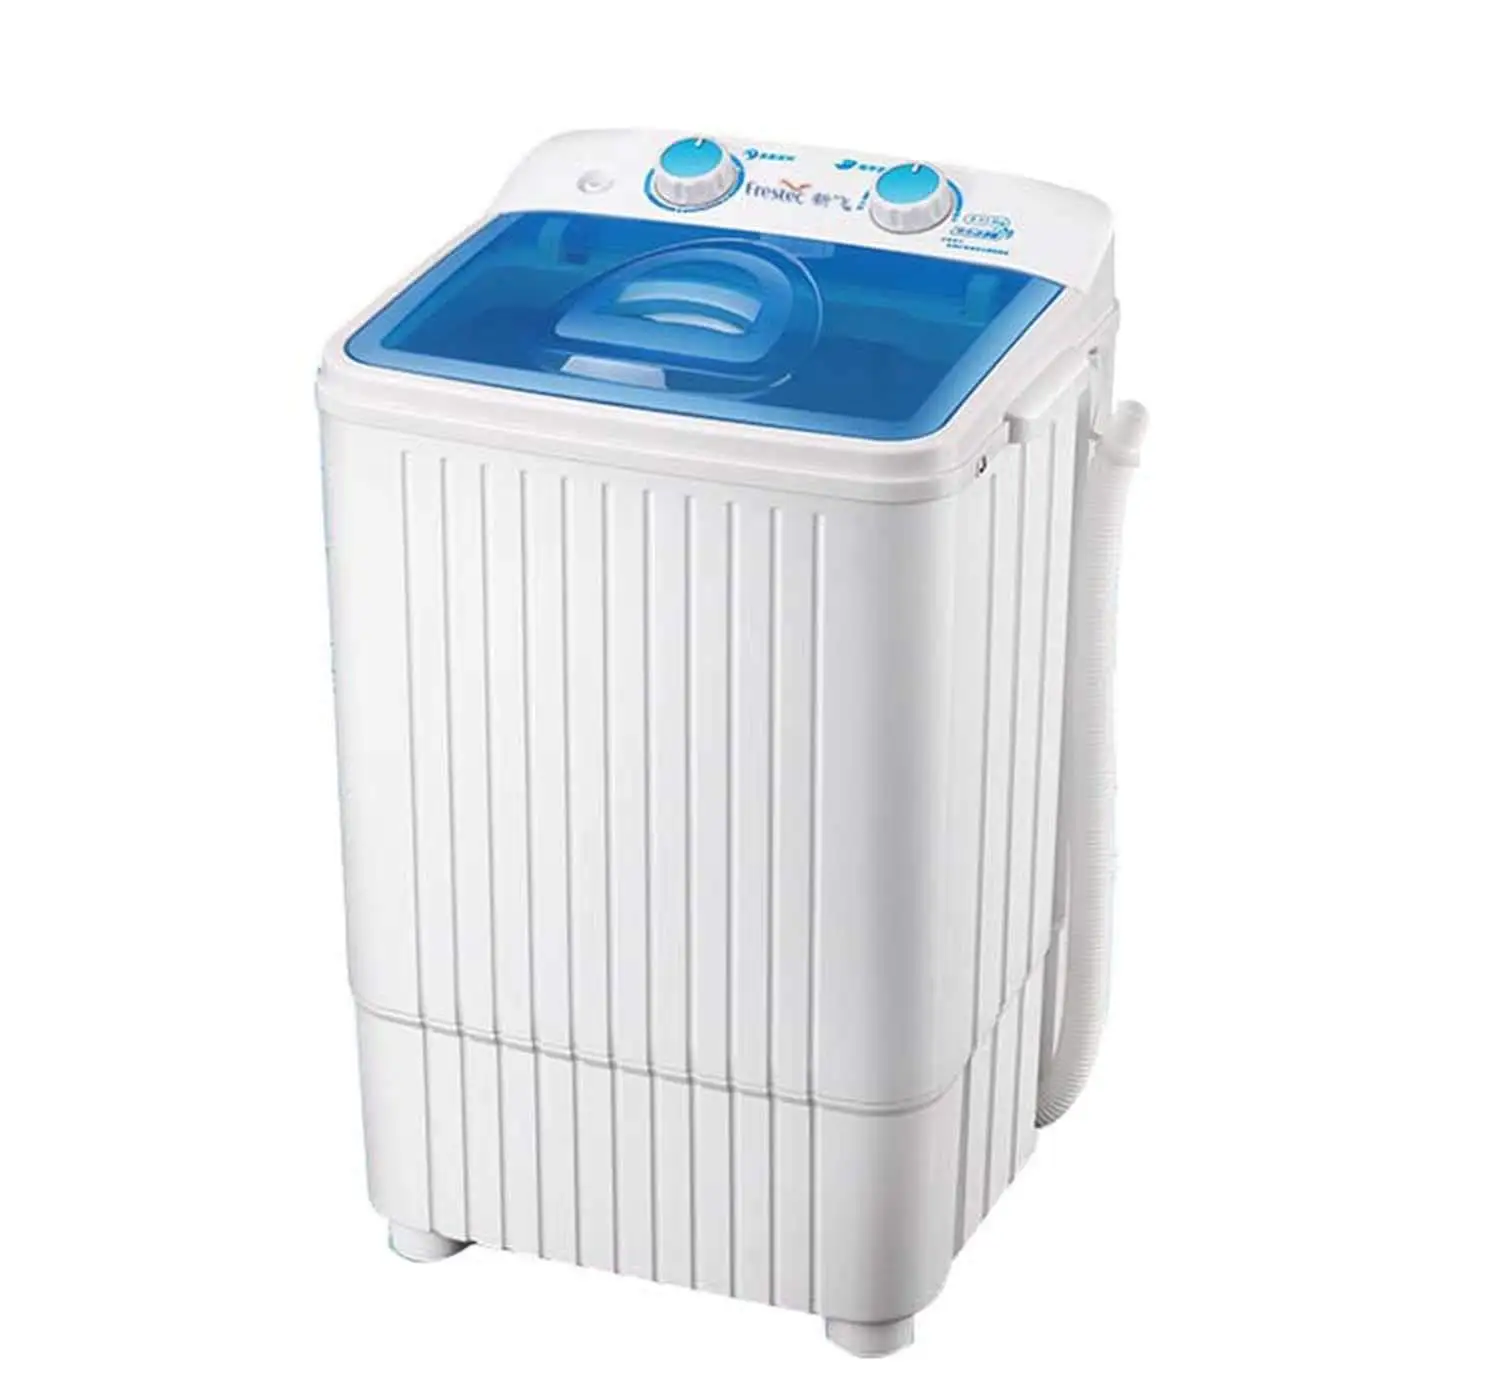 Buy DSHBB Mini Washing Machine ，Washing Capacity Large 4.5KG，Portable